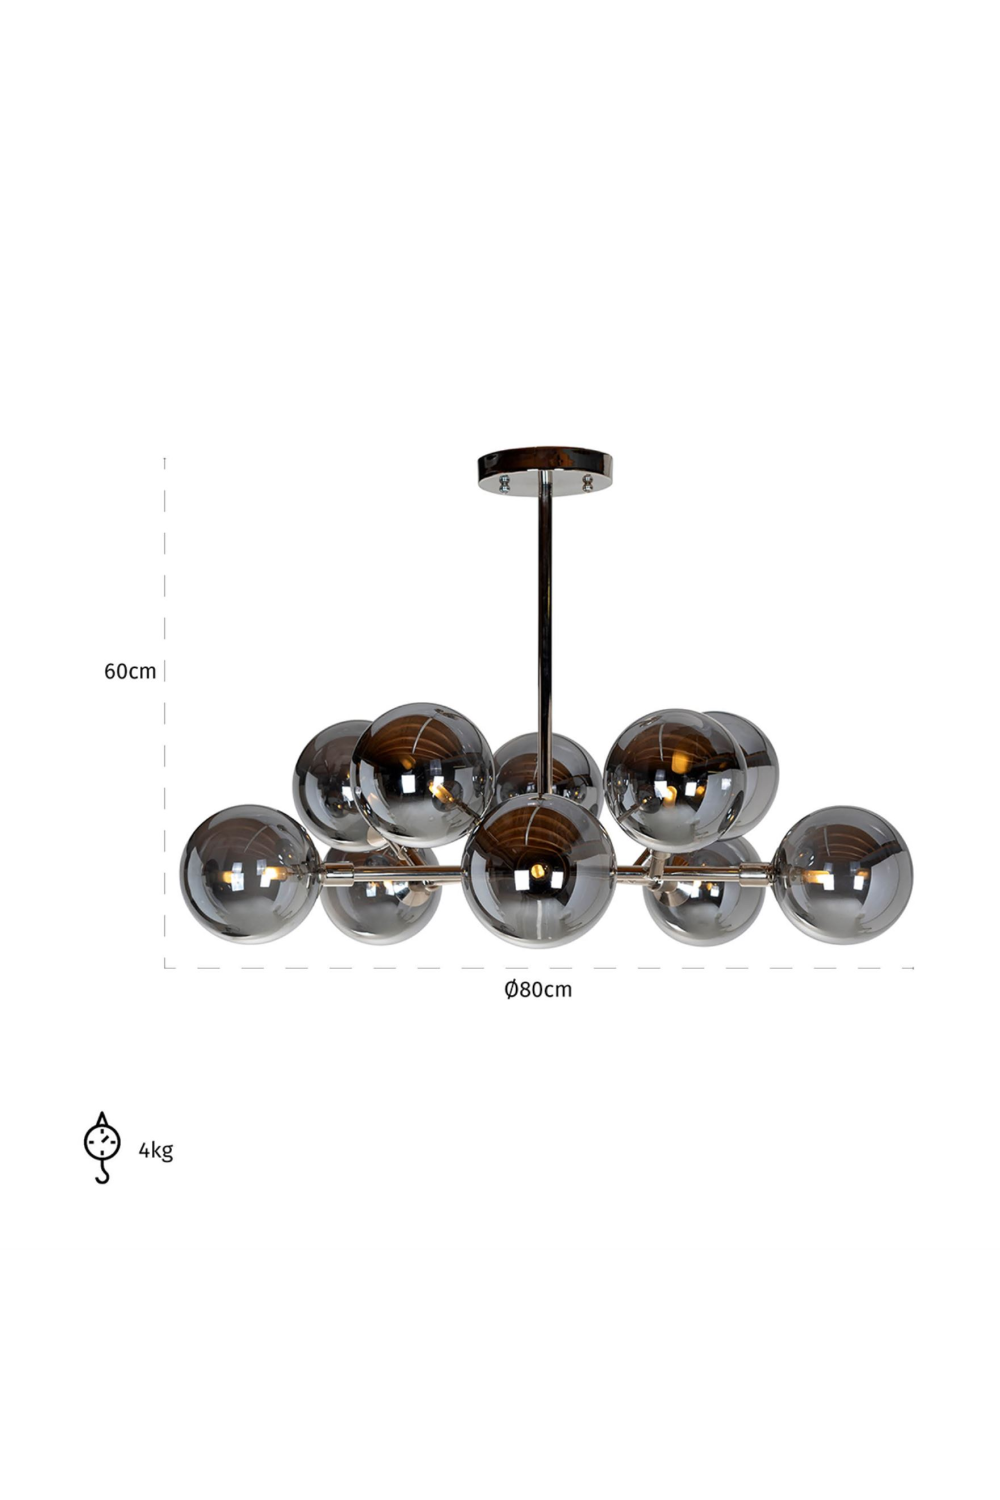 Orb-Shaped Hanging Lamp | OROA Riley | Oroa.com